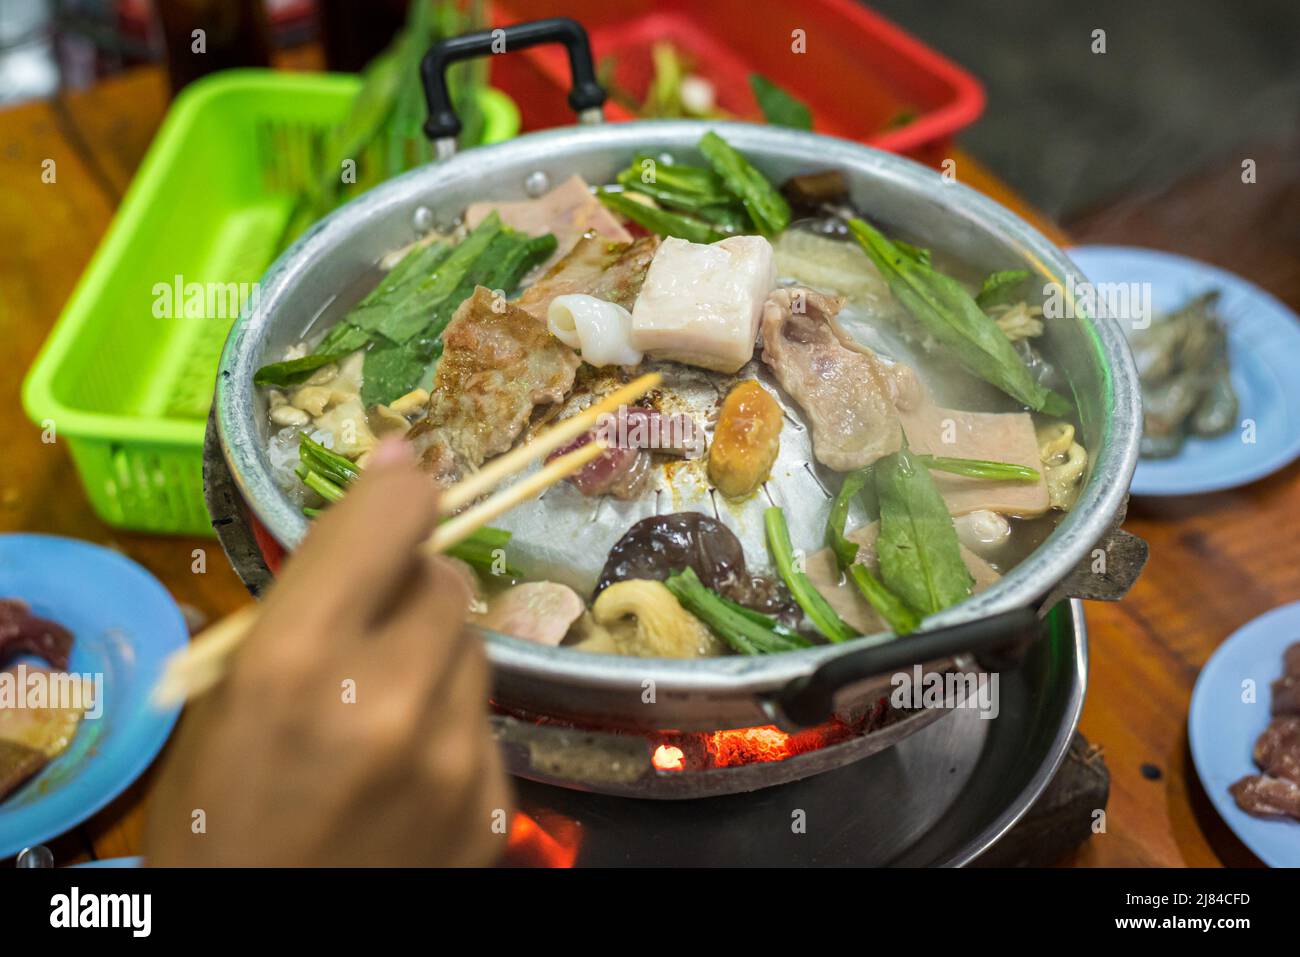 Carne, funghi e culantro assortiti (eryngium) cucinati su focaccine thailandesi (maw fai) in un ristorante self-service a Bangkok, Thailandia. Foto Stock